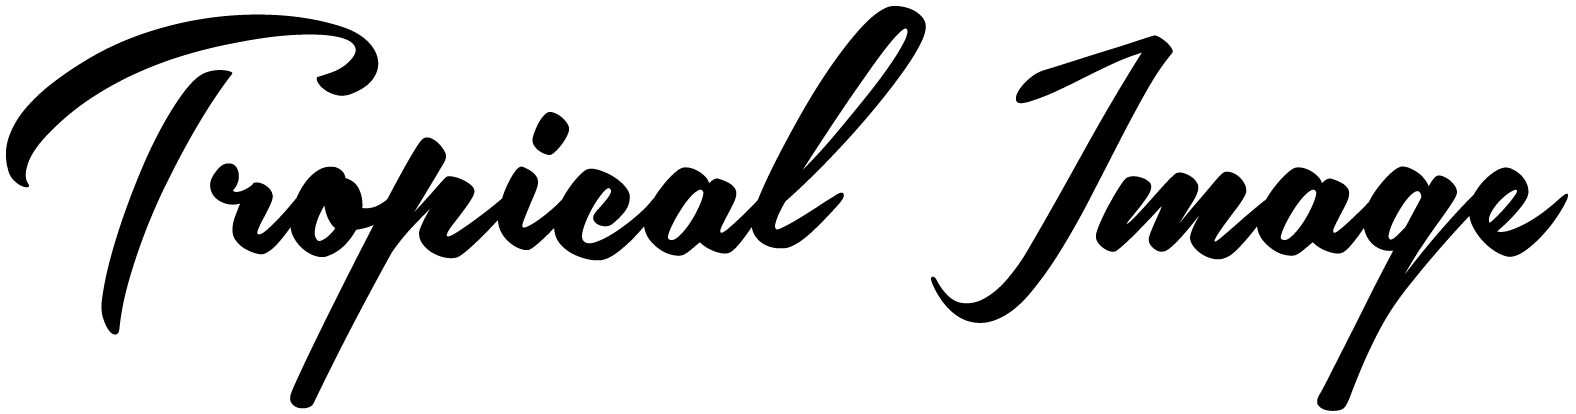 Tropical Image Logo